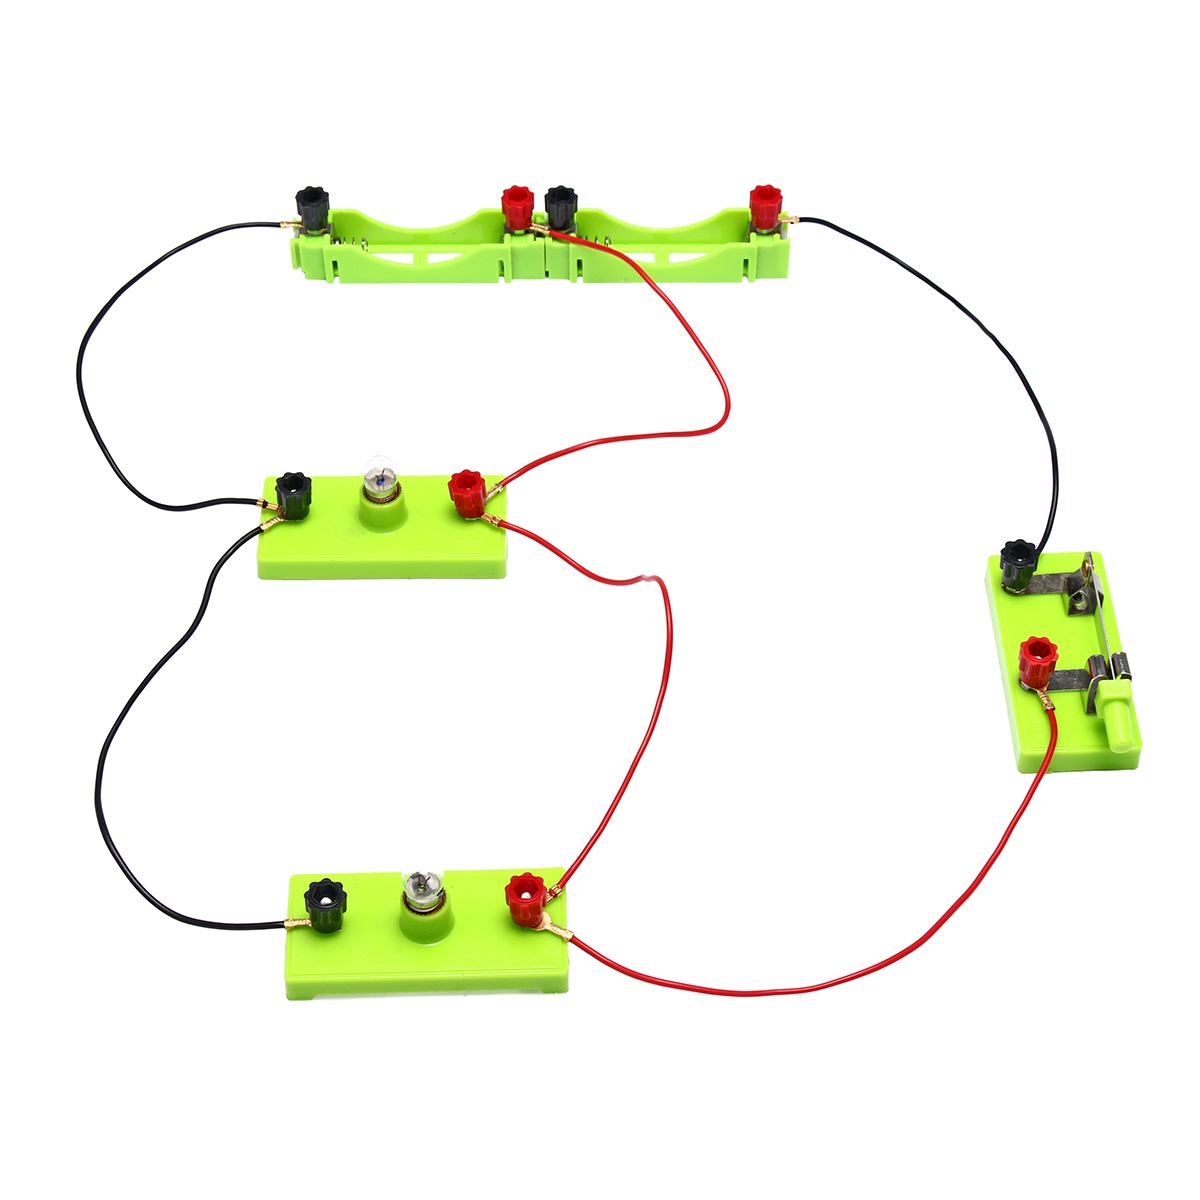 Electric-Circuit-Kit-Bulb-Switch-Conductive-Line-Kid-School-Educational-Science-Toy-DIY-Montessori-1313794-2